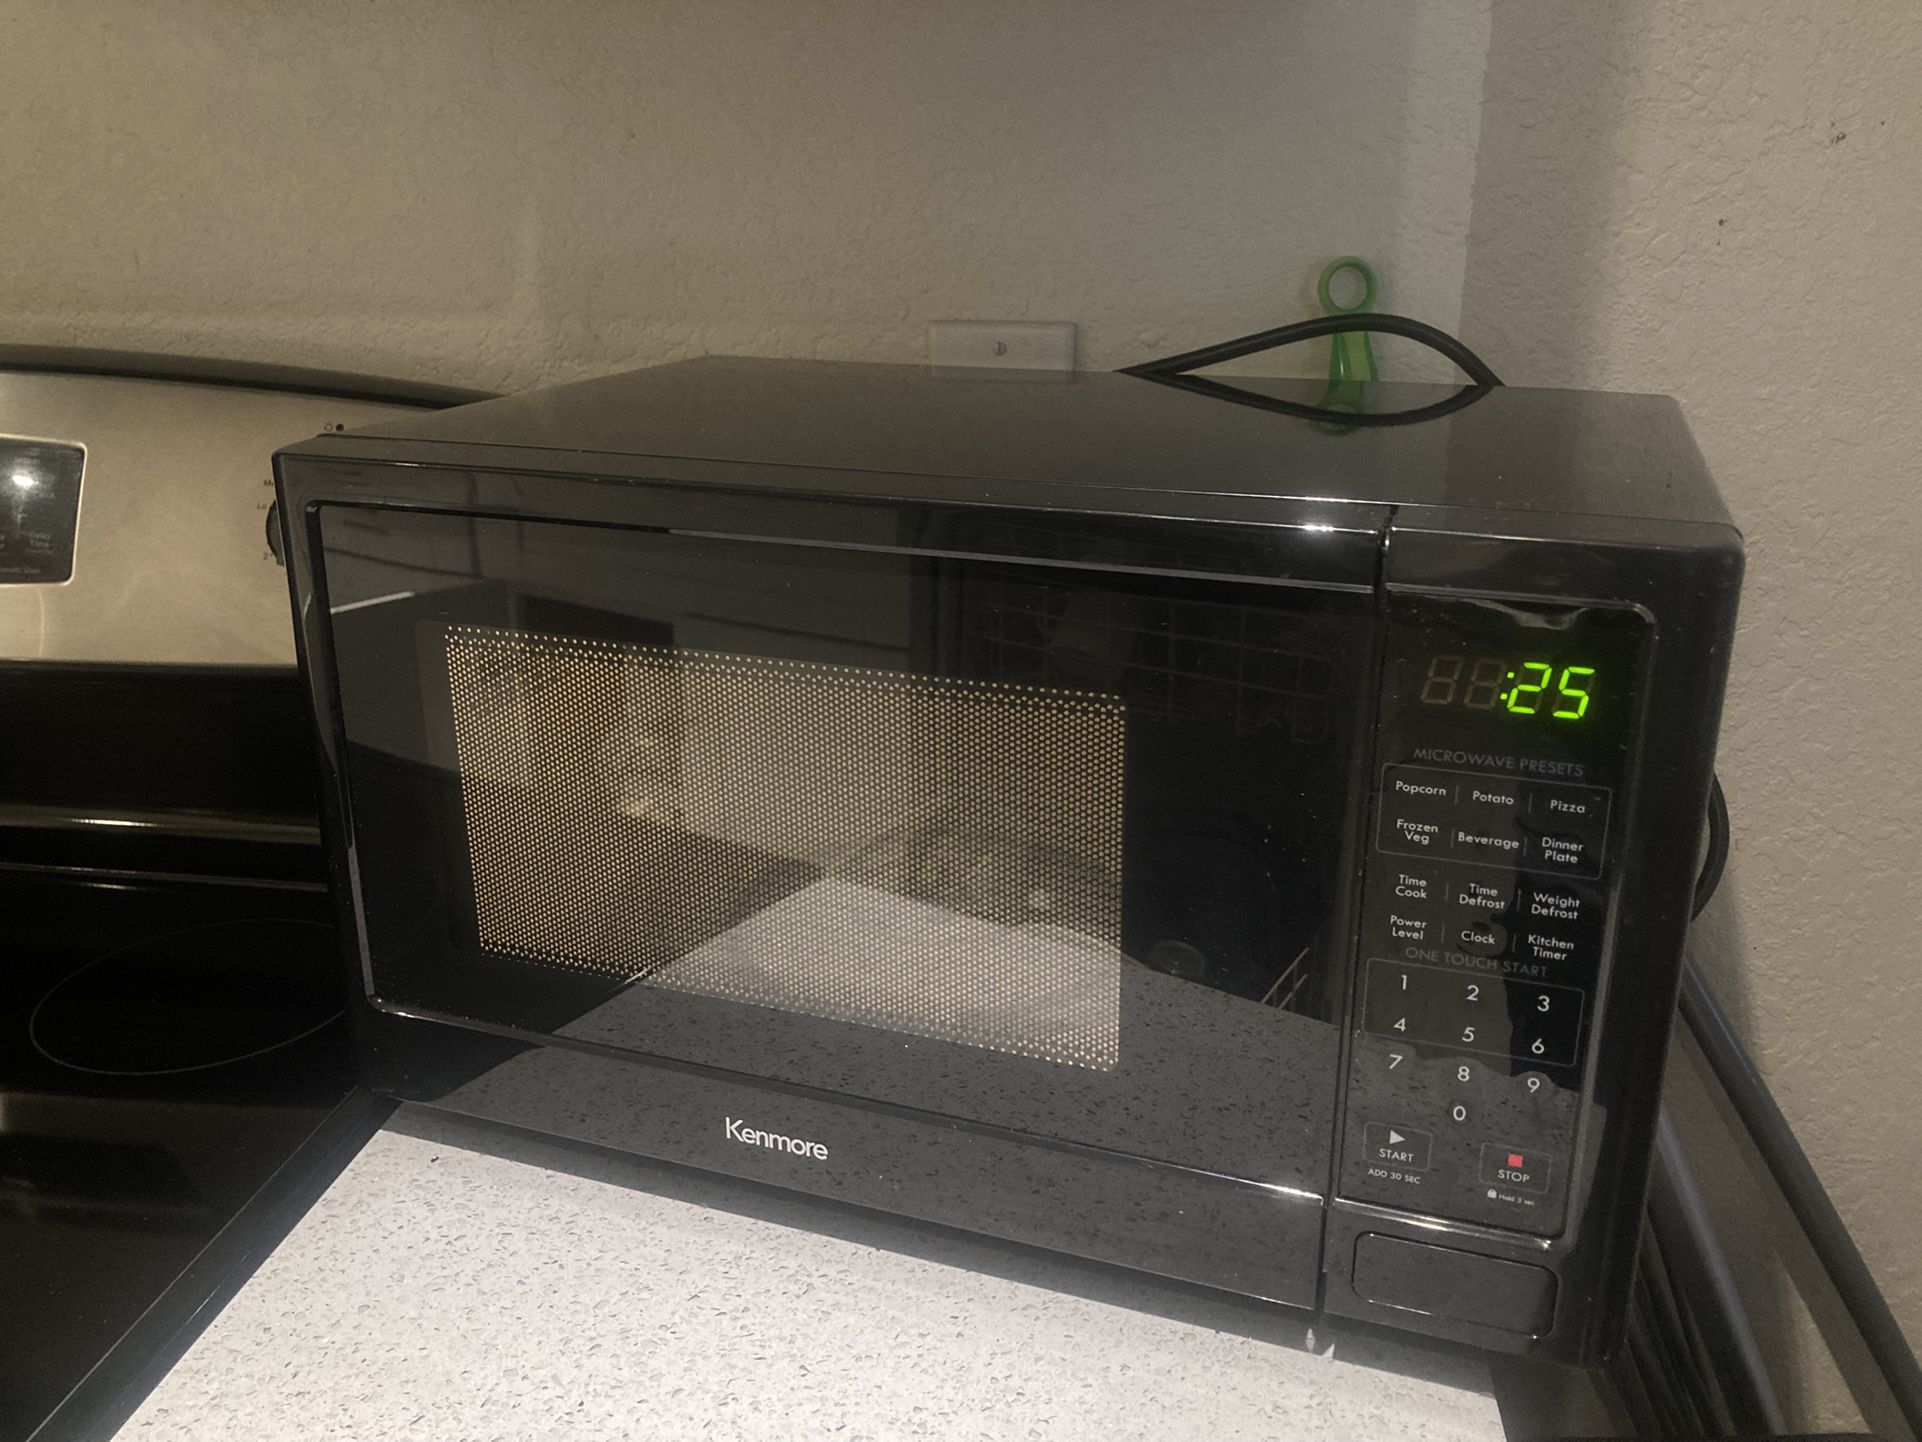 Kenmore 73779 0.9 cu. ft. Countertop Microwave Oven - Black